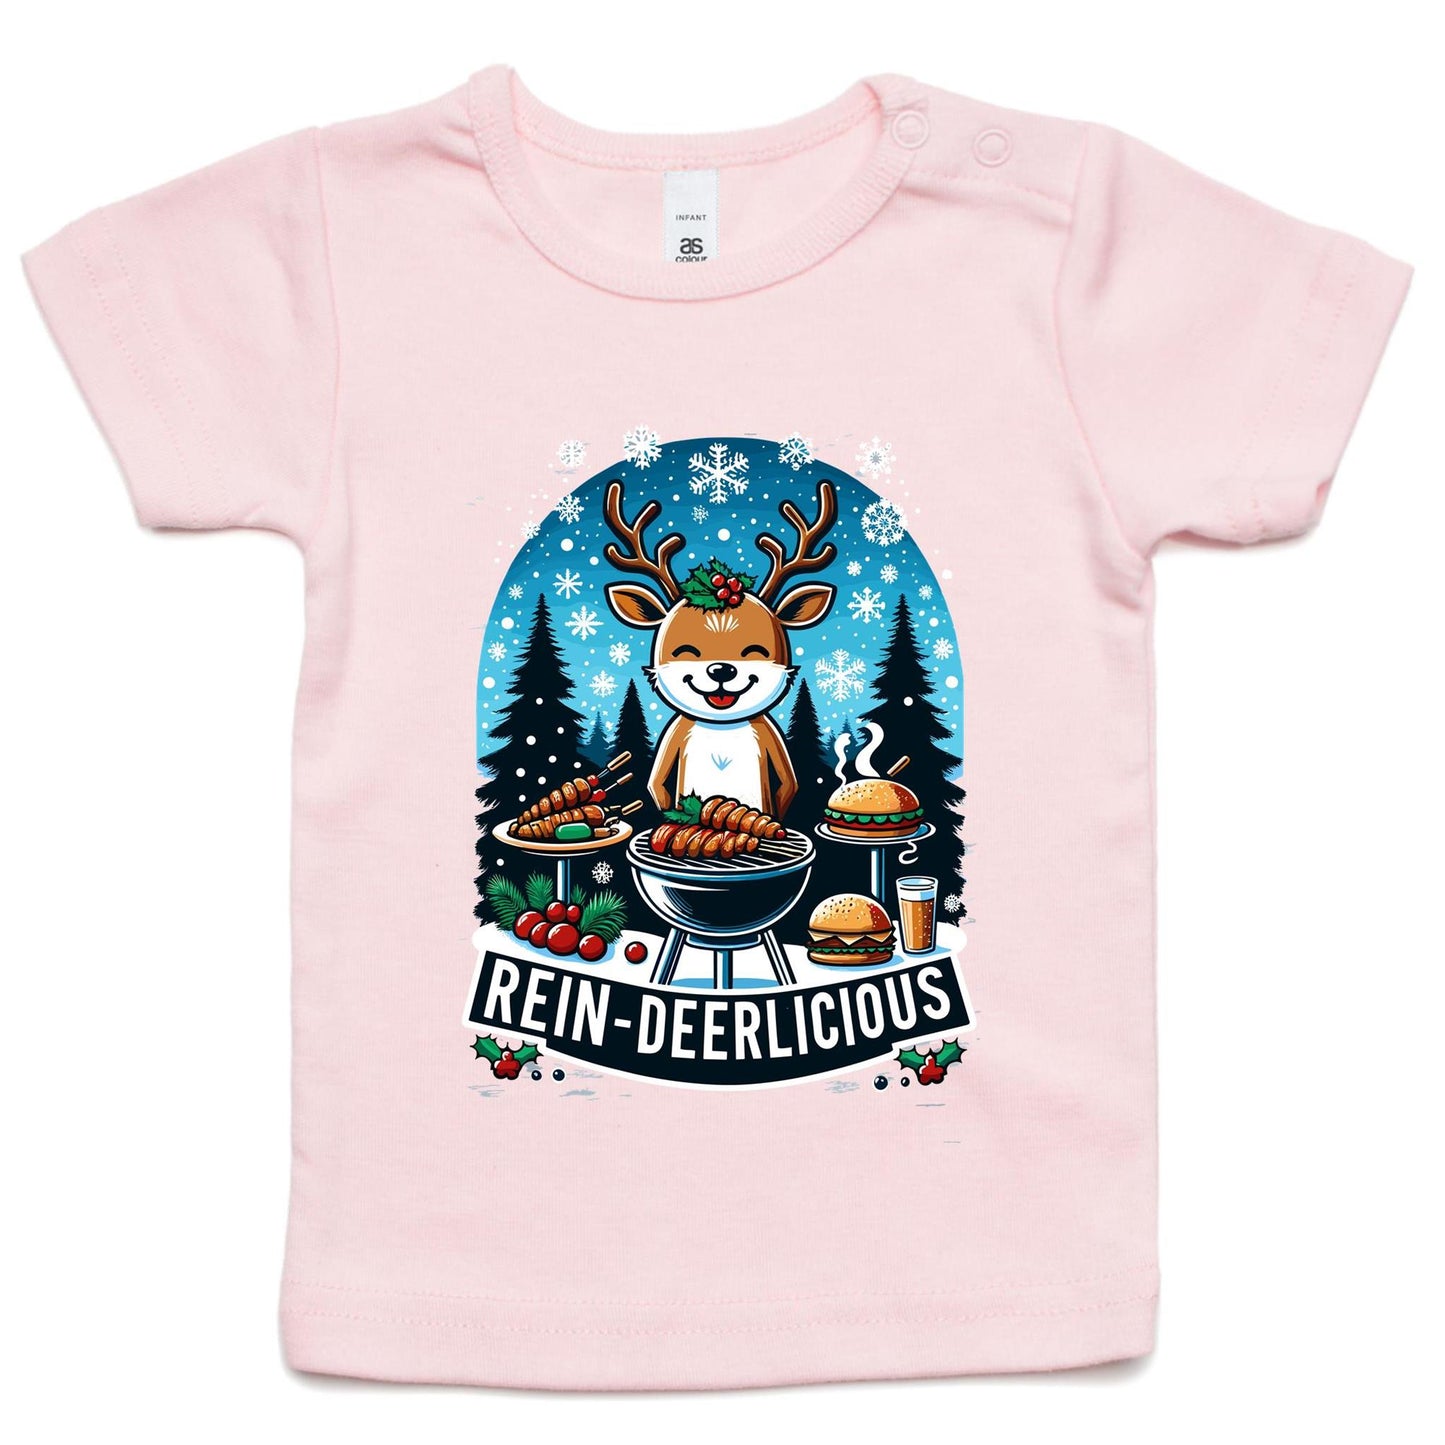 Reindeerlicious Christmas BBQ - Infant Wee Tee